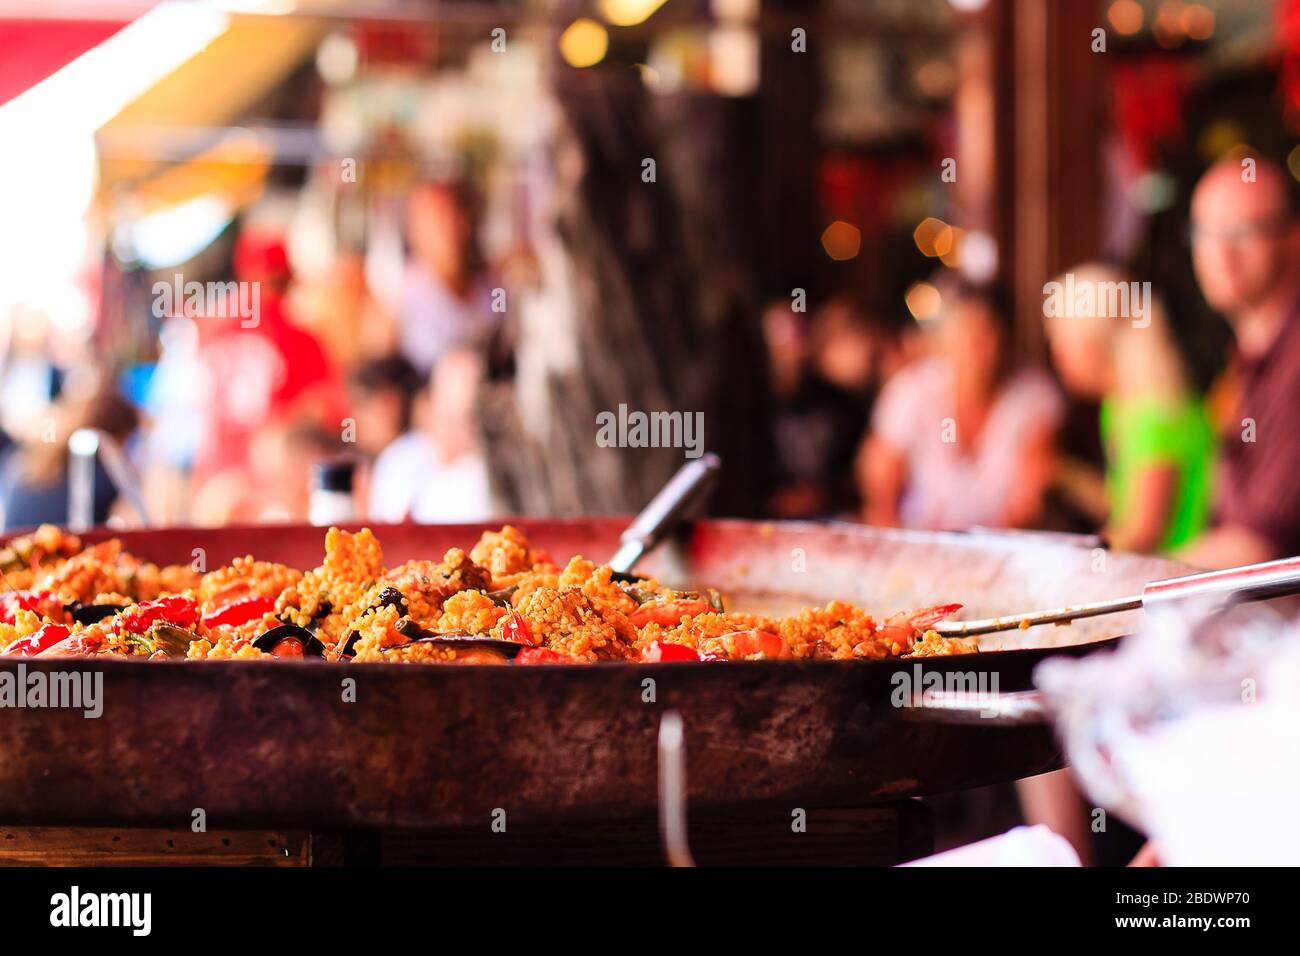 https://c8.alamy.com/comp/2BDWP70/closeup-of-seafood-paella-in-a-large-frying-pan-at-chatuchak-weekend-market-in-bangkok-thailand-2BDWP70.jpg